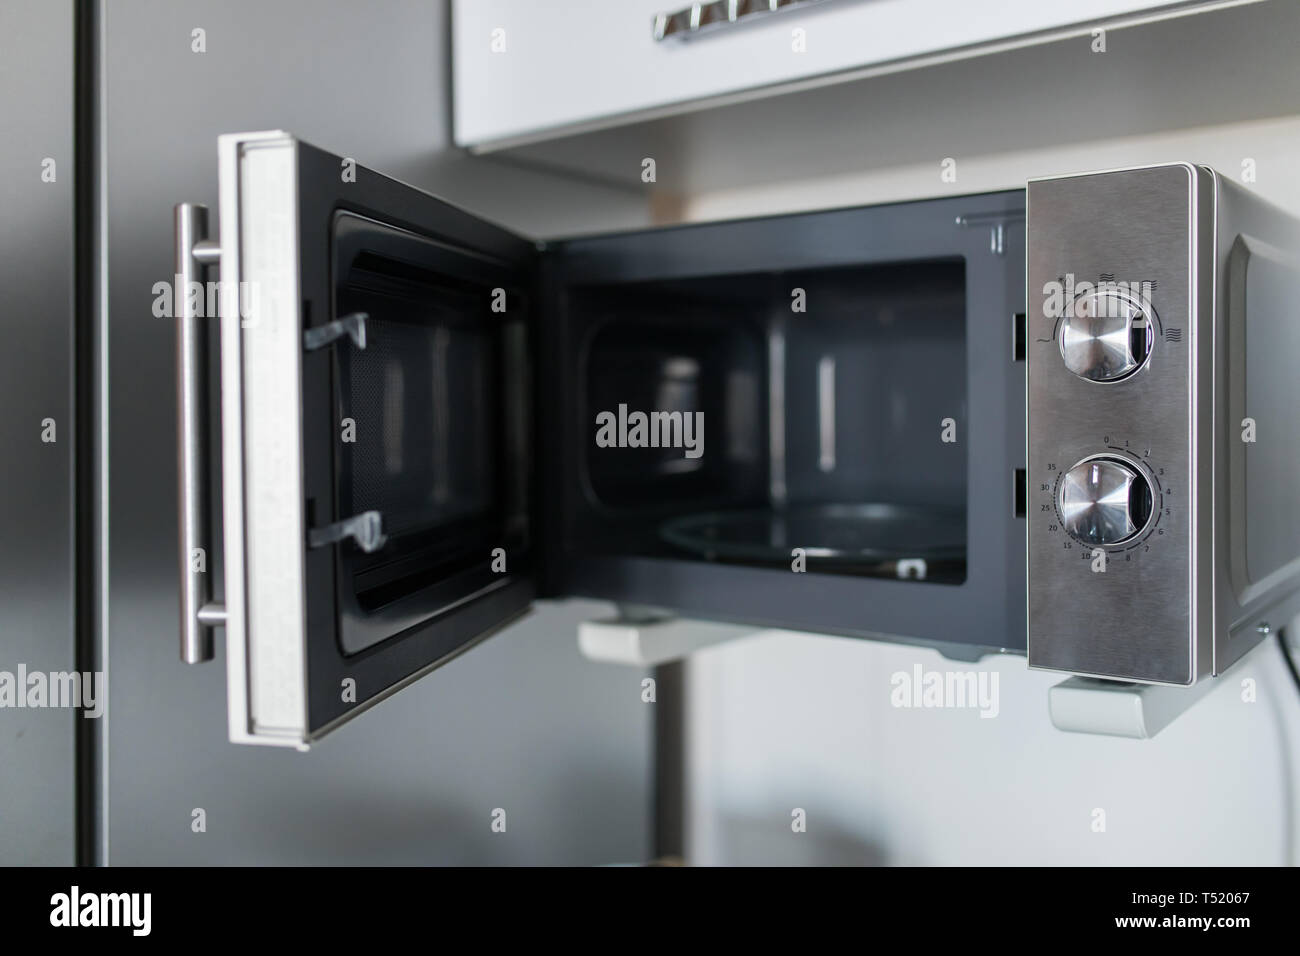 Leere Mikrowelle mit offener Tür Stockfotografie - Alamy